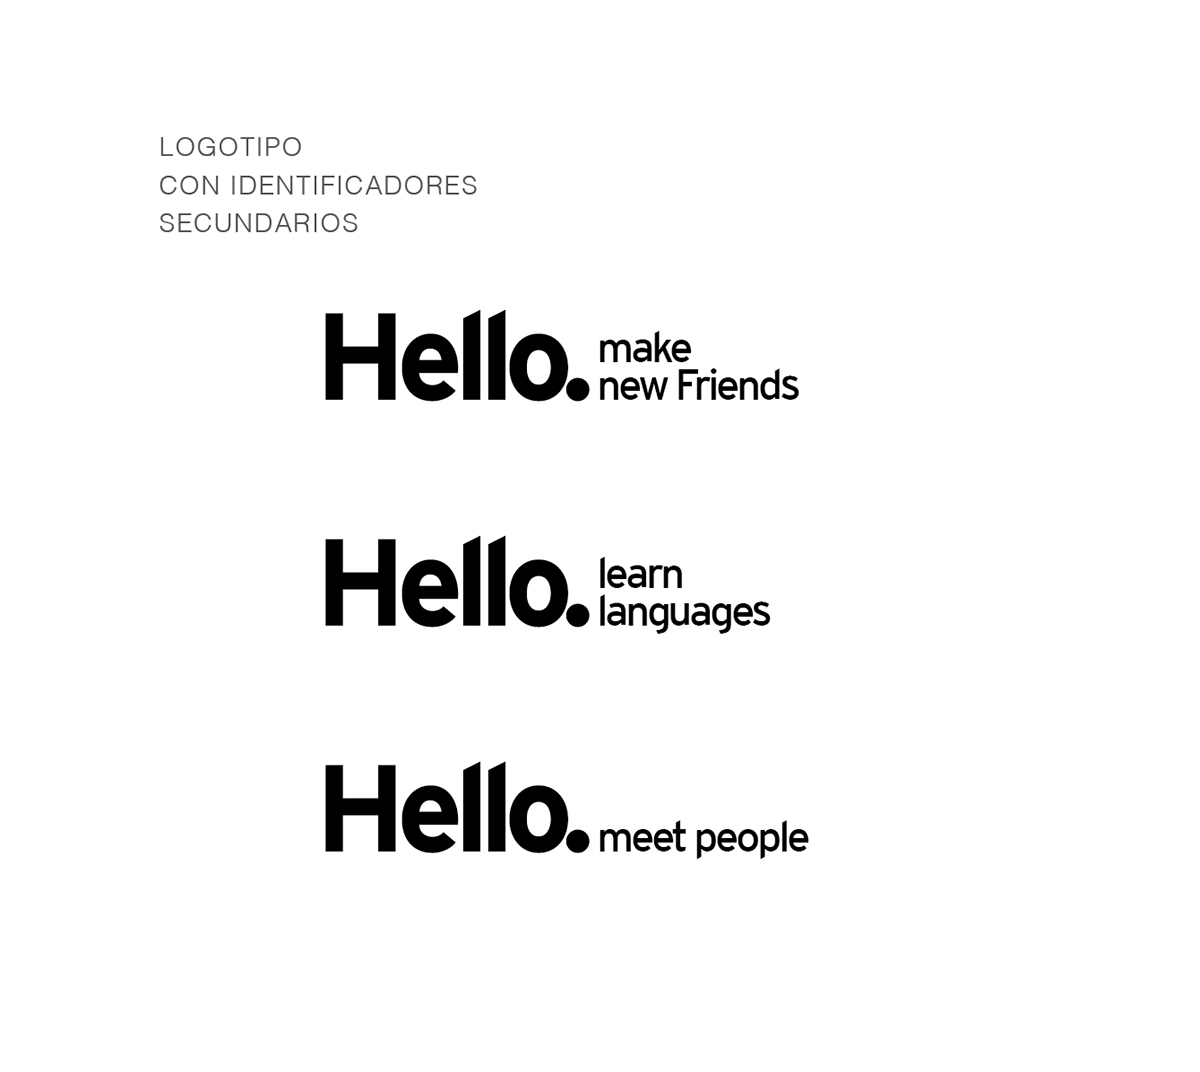 Logotipo portal idiomas language Logotype logo Logo Design